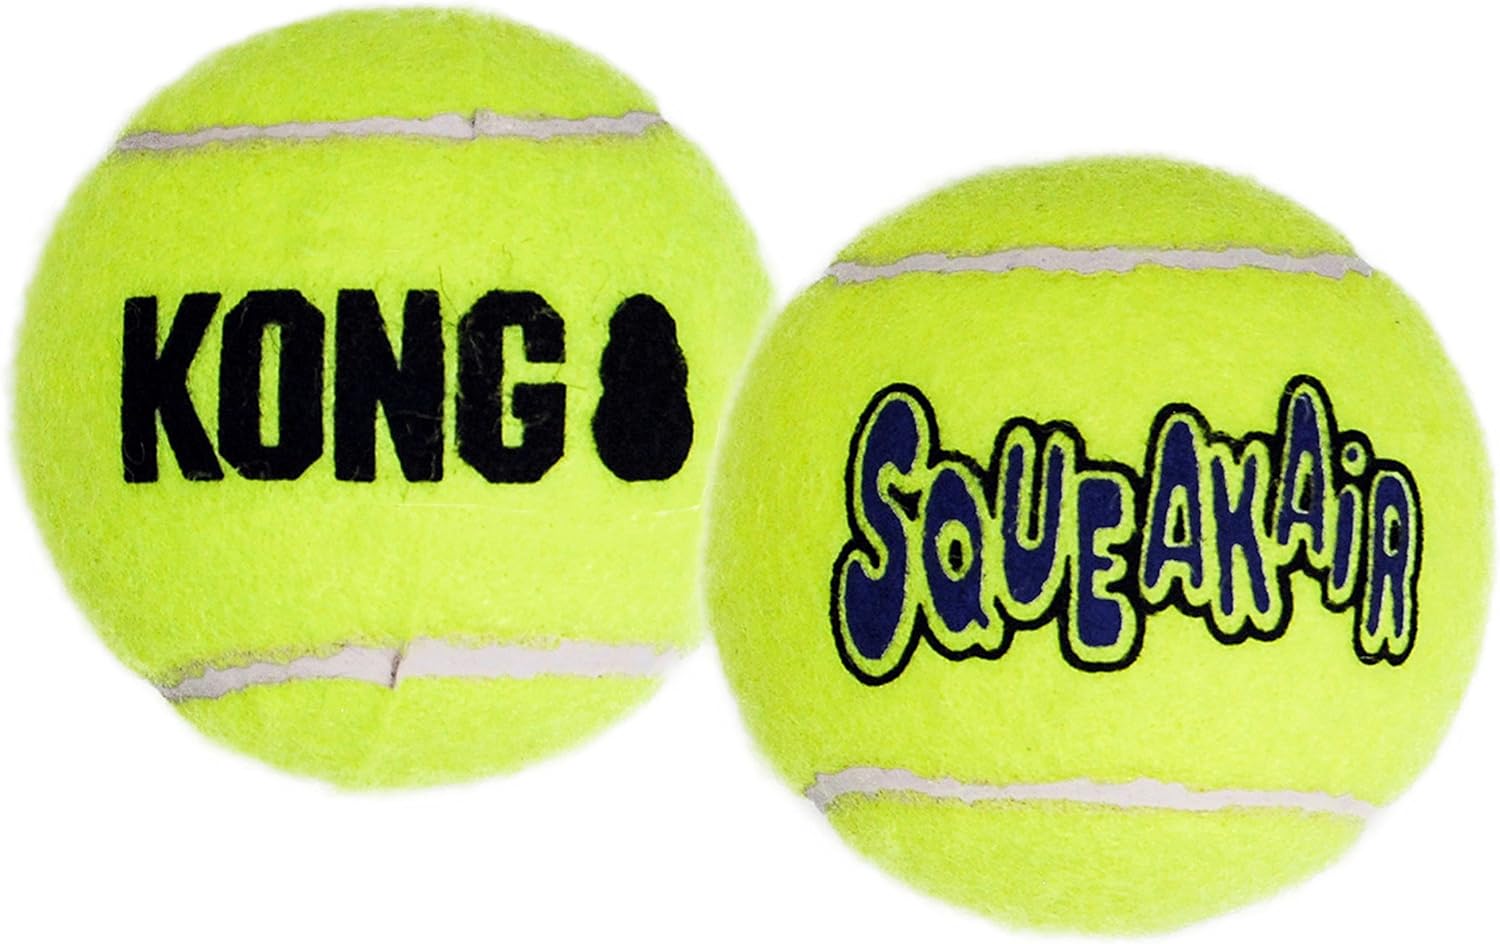 KONG Air Dog Squeakair Dog Toy Tennis Balls ($6.49)